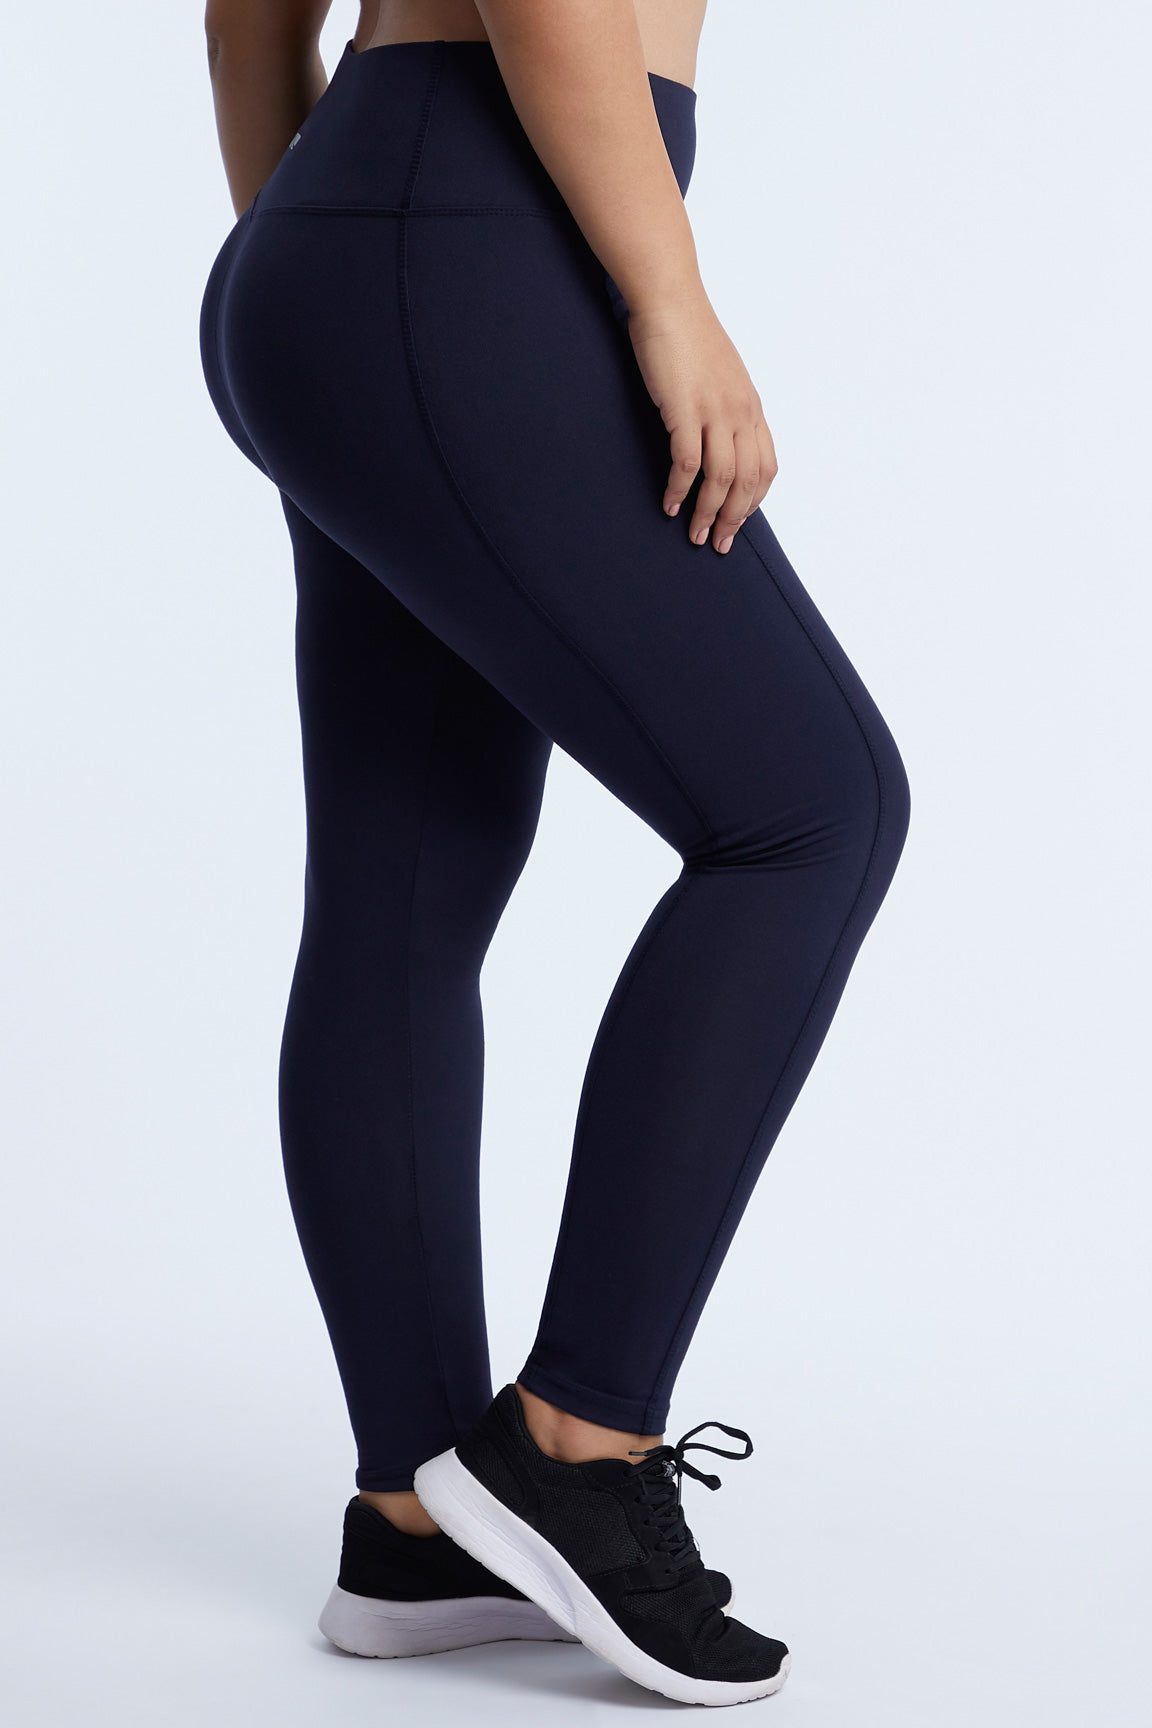 Printed high waist compression yoga leggings. – CCFITSOUL